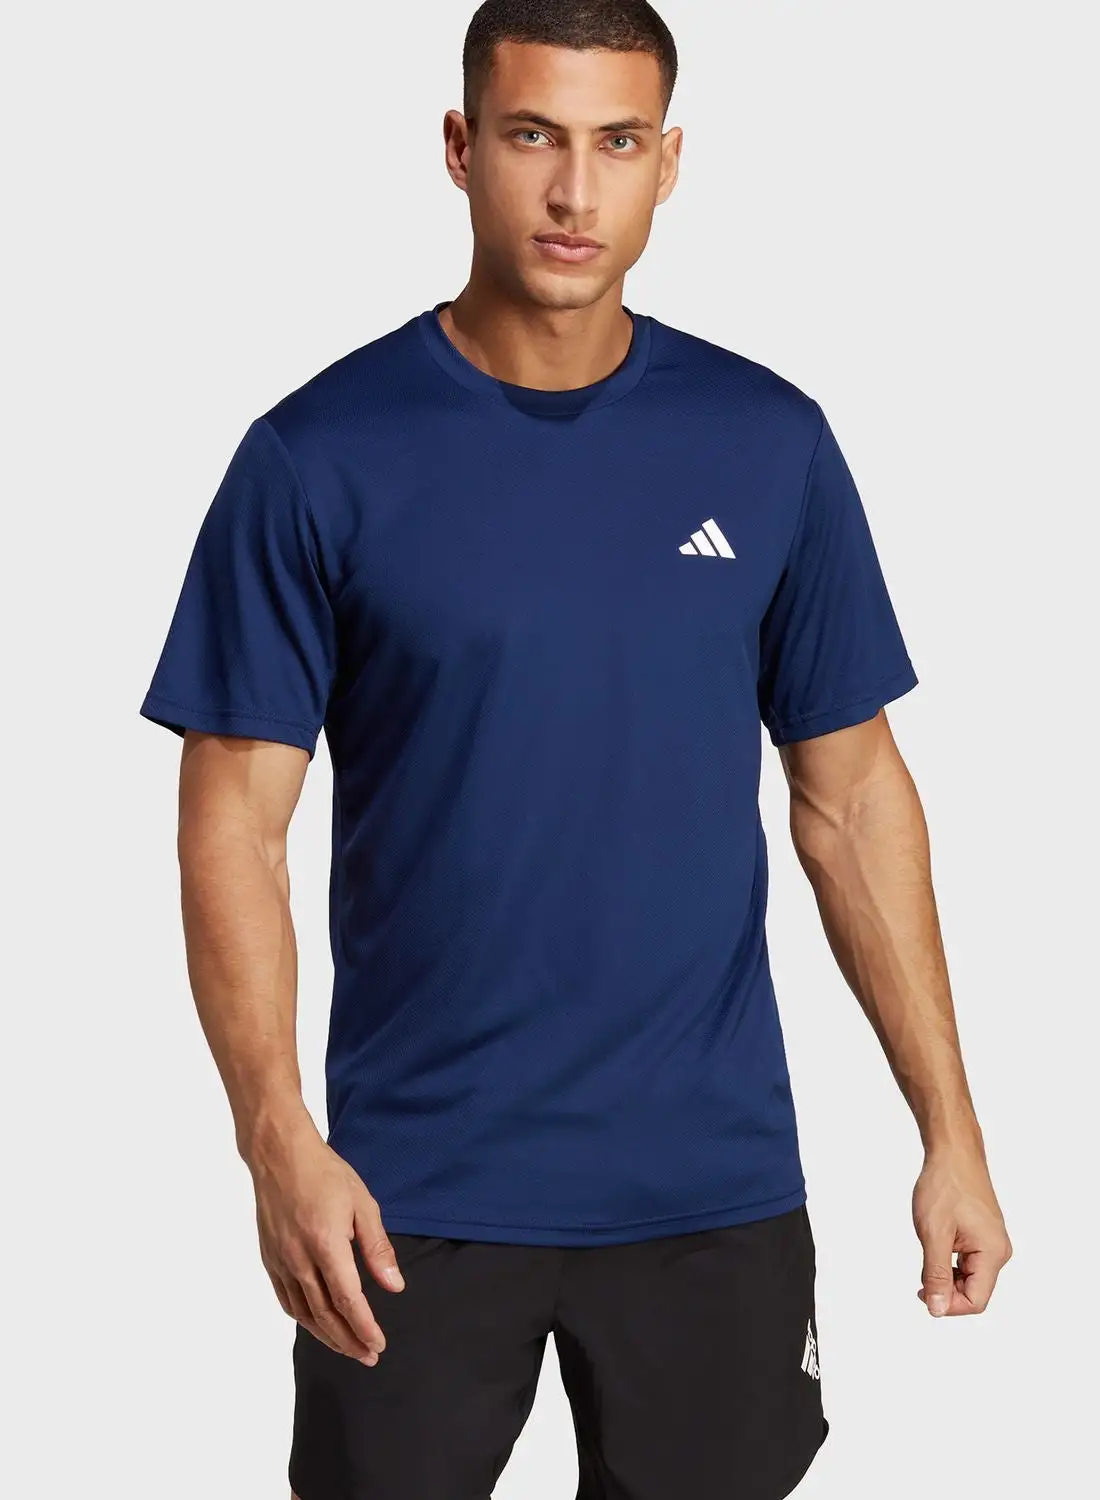 Adidas Train Essential Base T-shirt